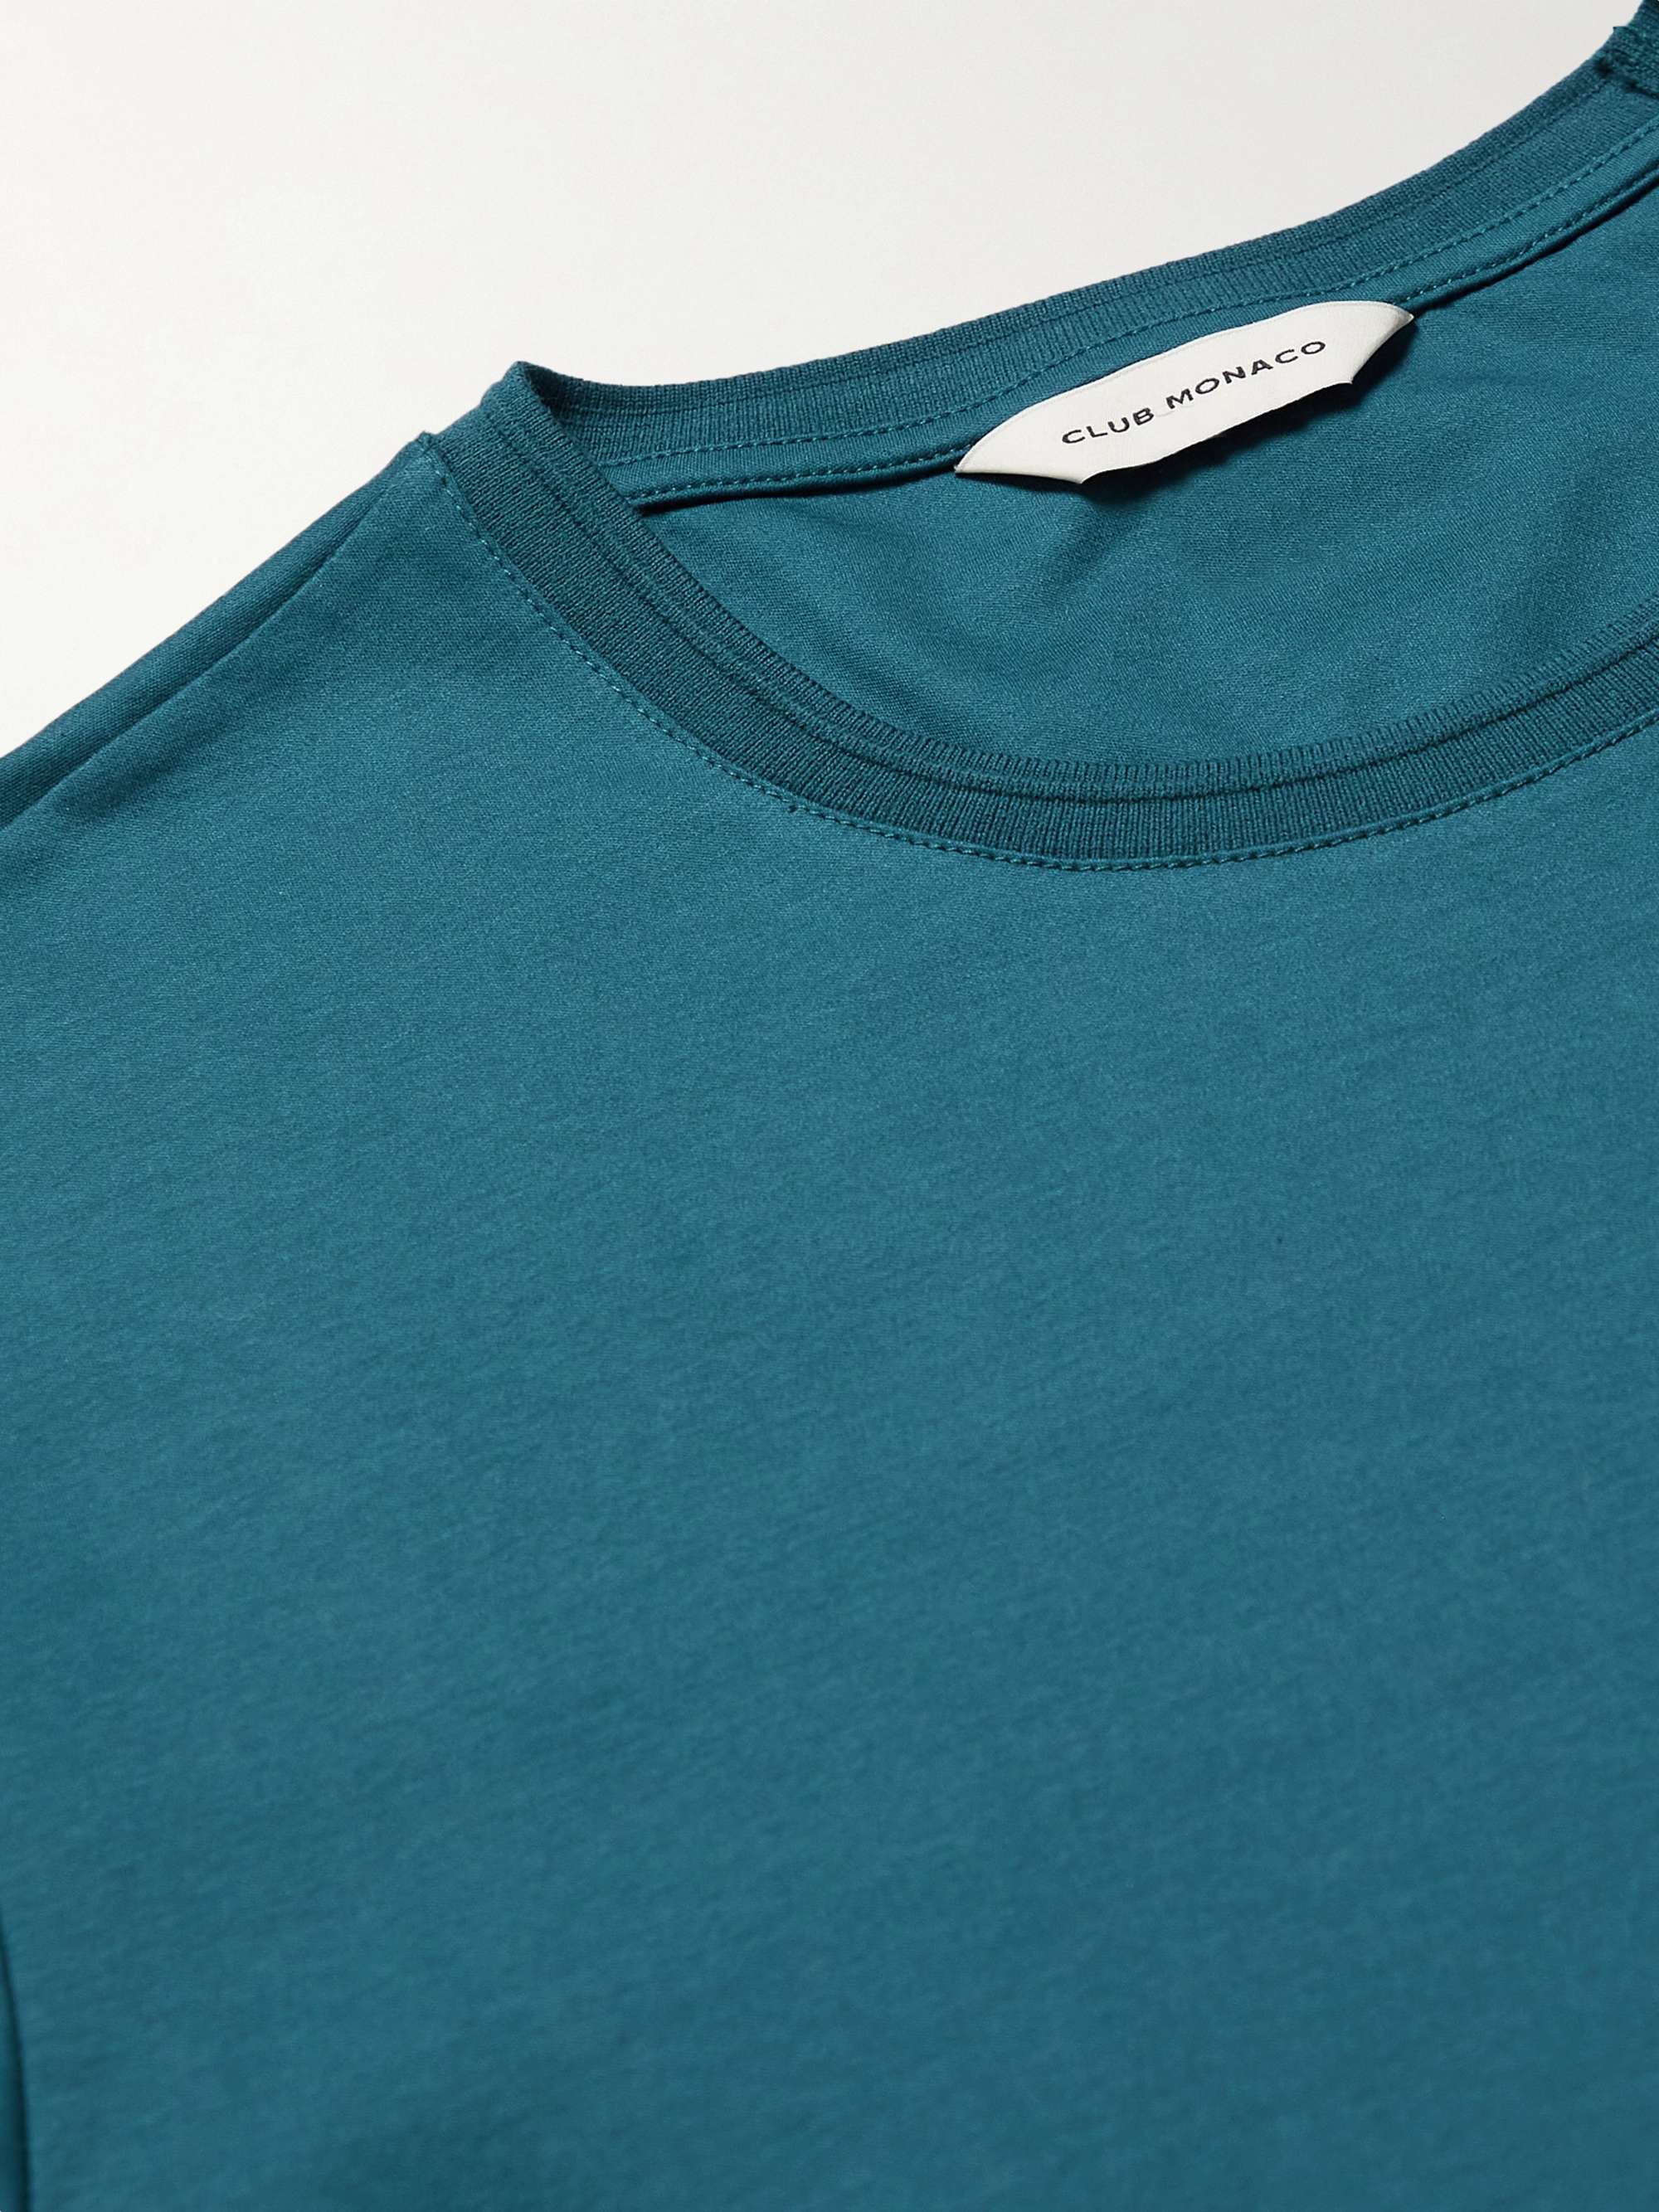 CLUB MONACO Cotton-Jersey T-Shirt